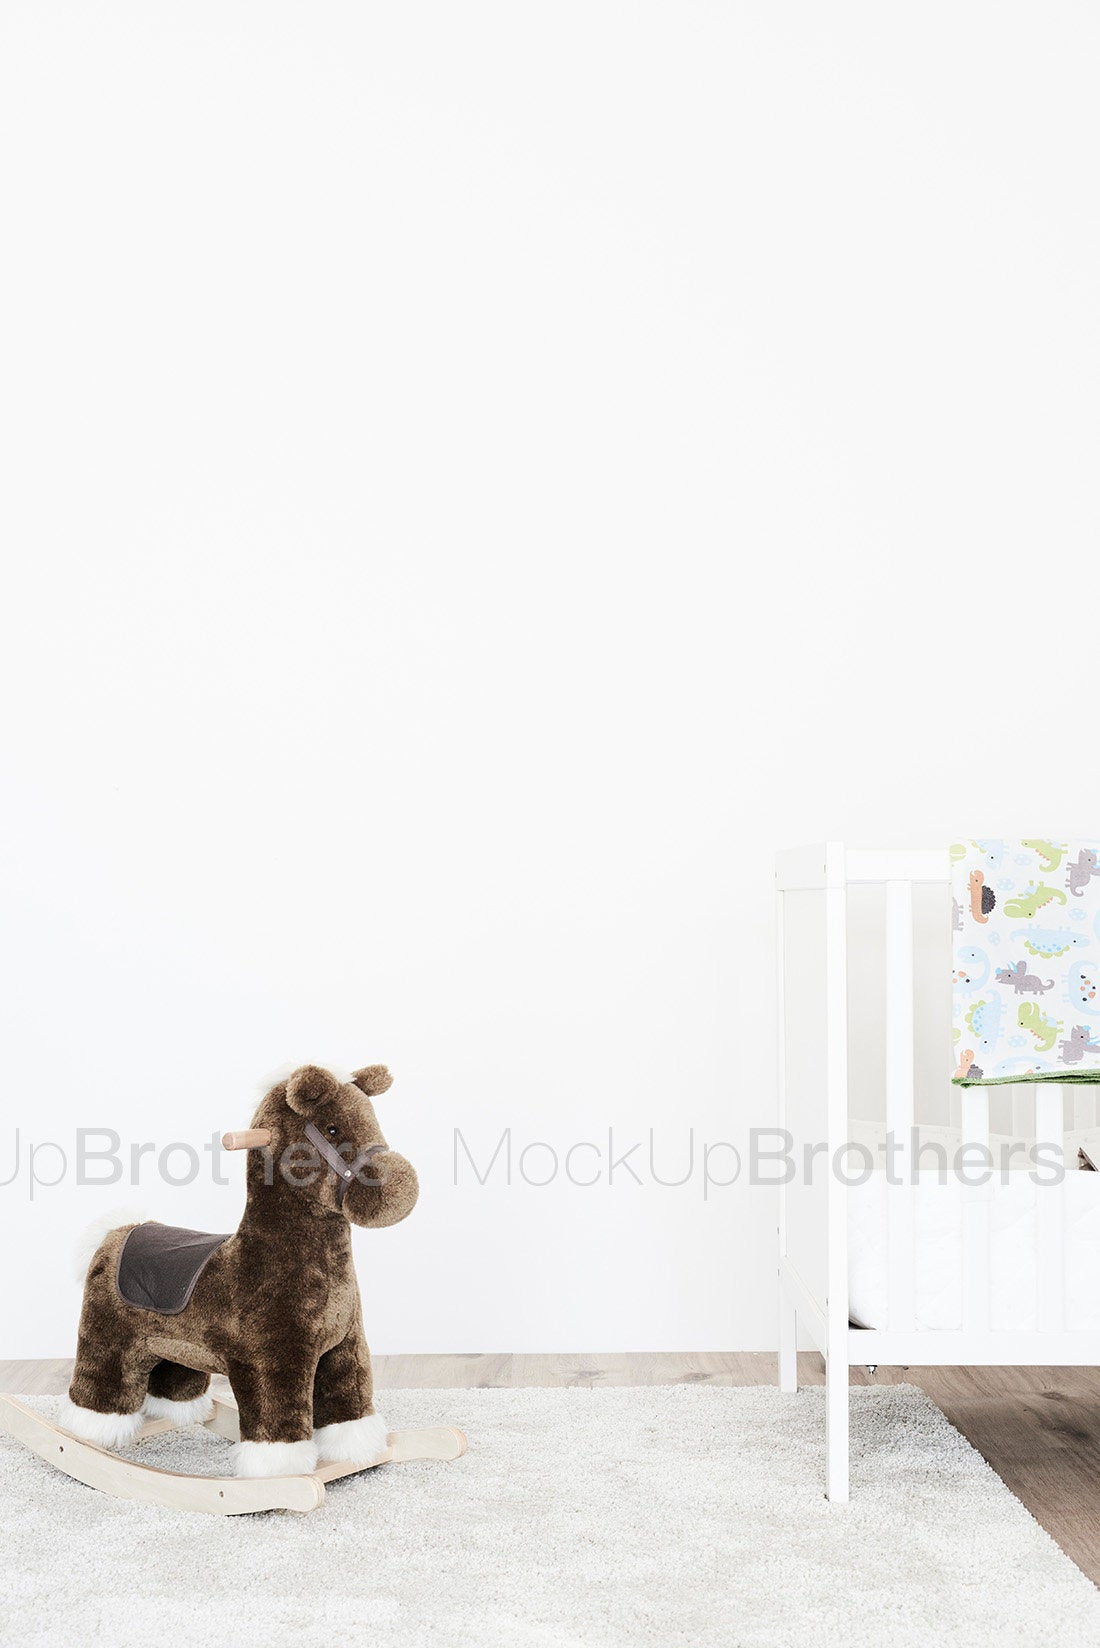 Nursery room mock up by mockup brothers